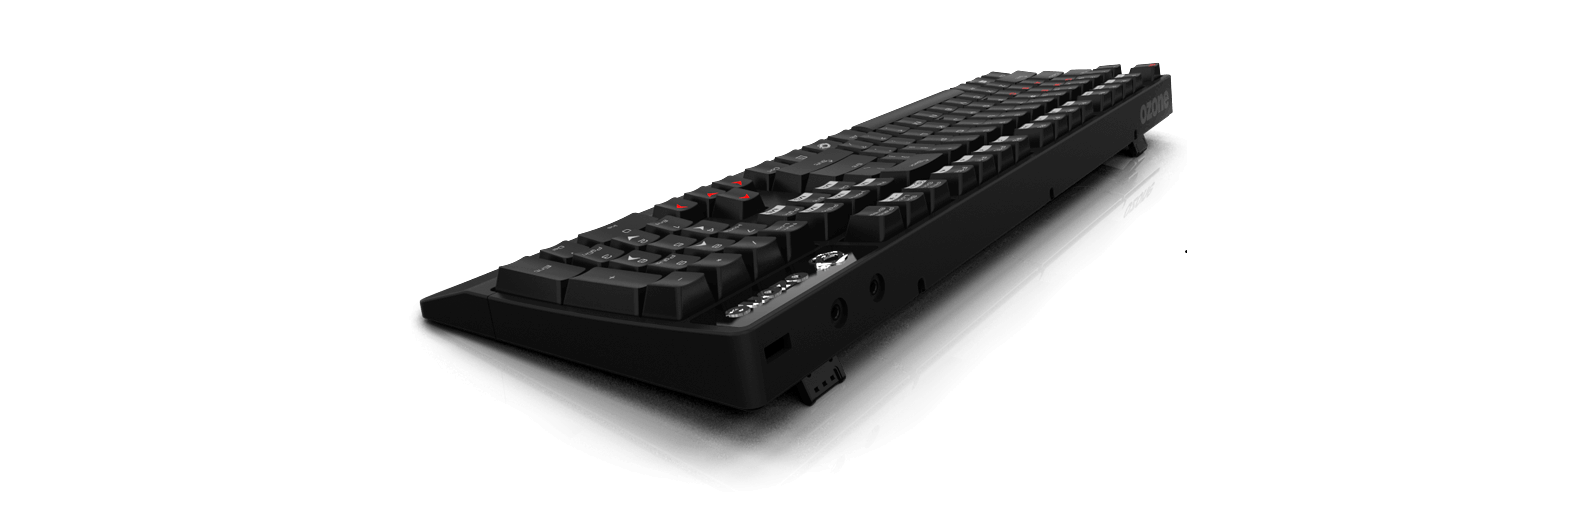 Keyboard OZONE STRIKE PRO Red Switch Mechanical Progaming Keyboard trang bị cổng audio và usb ở đằng sau